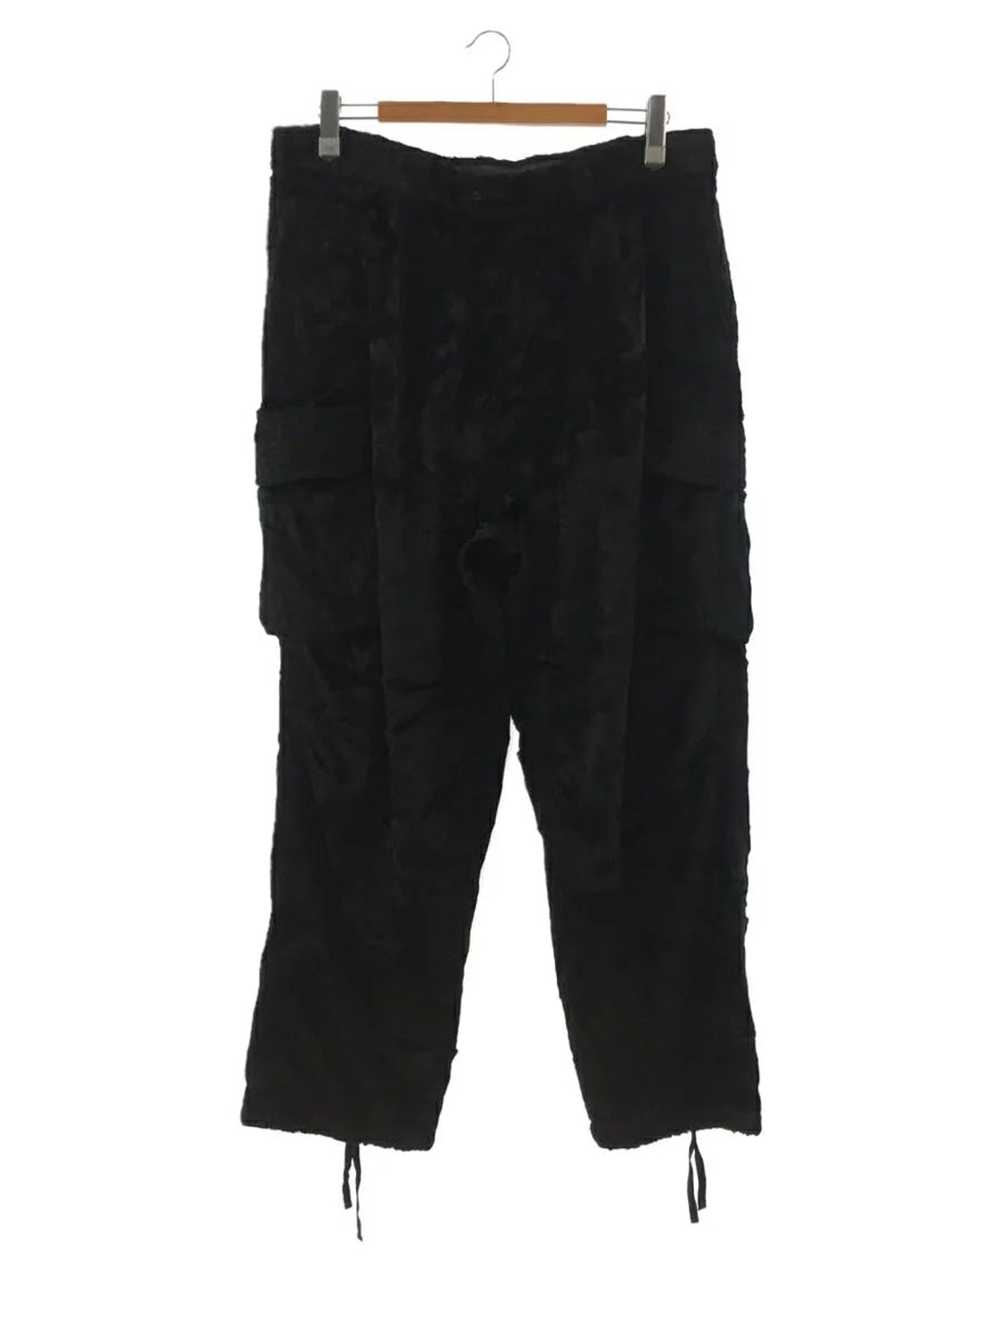 Spenco Supreme Slippers Mens Size 11 Shoes Black Faux Fur Lined Comfort  Slip On